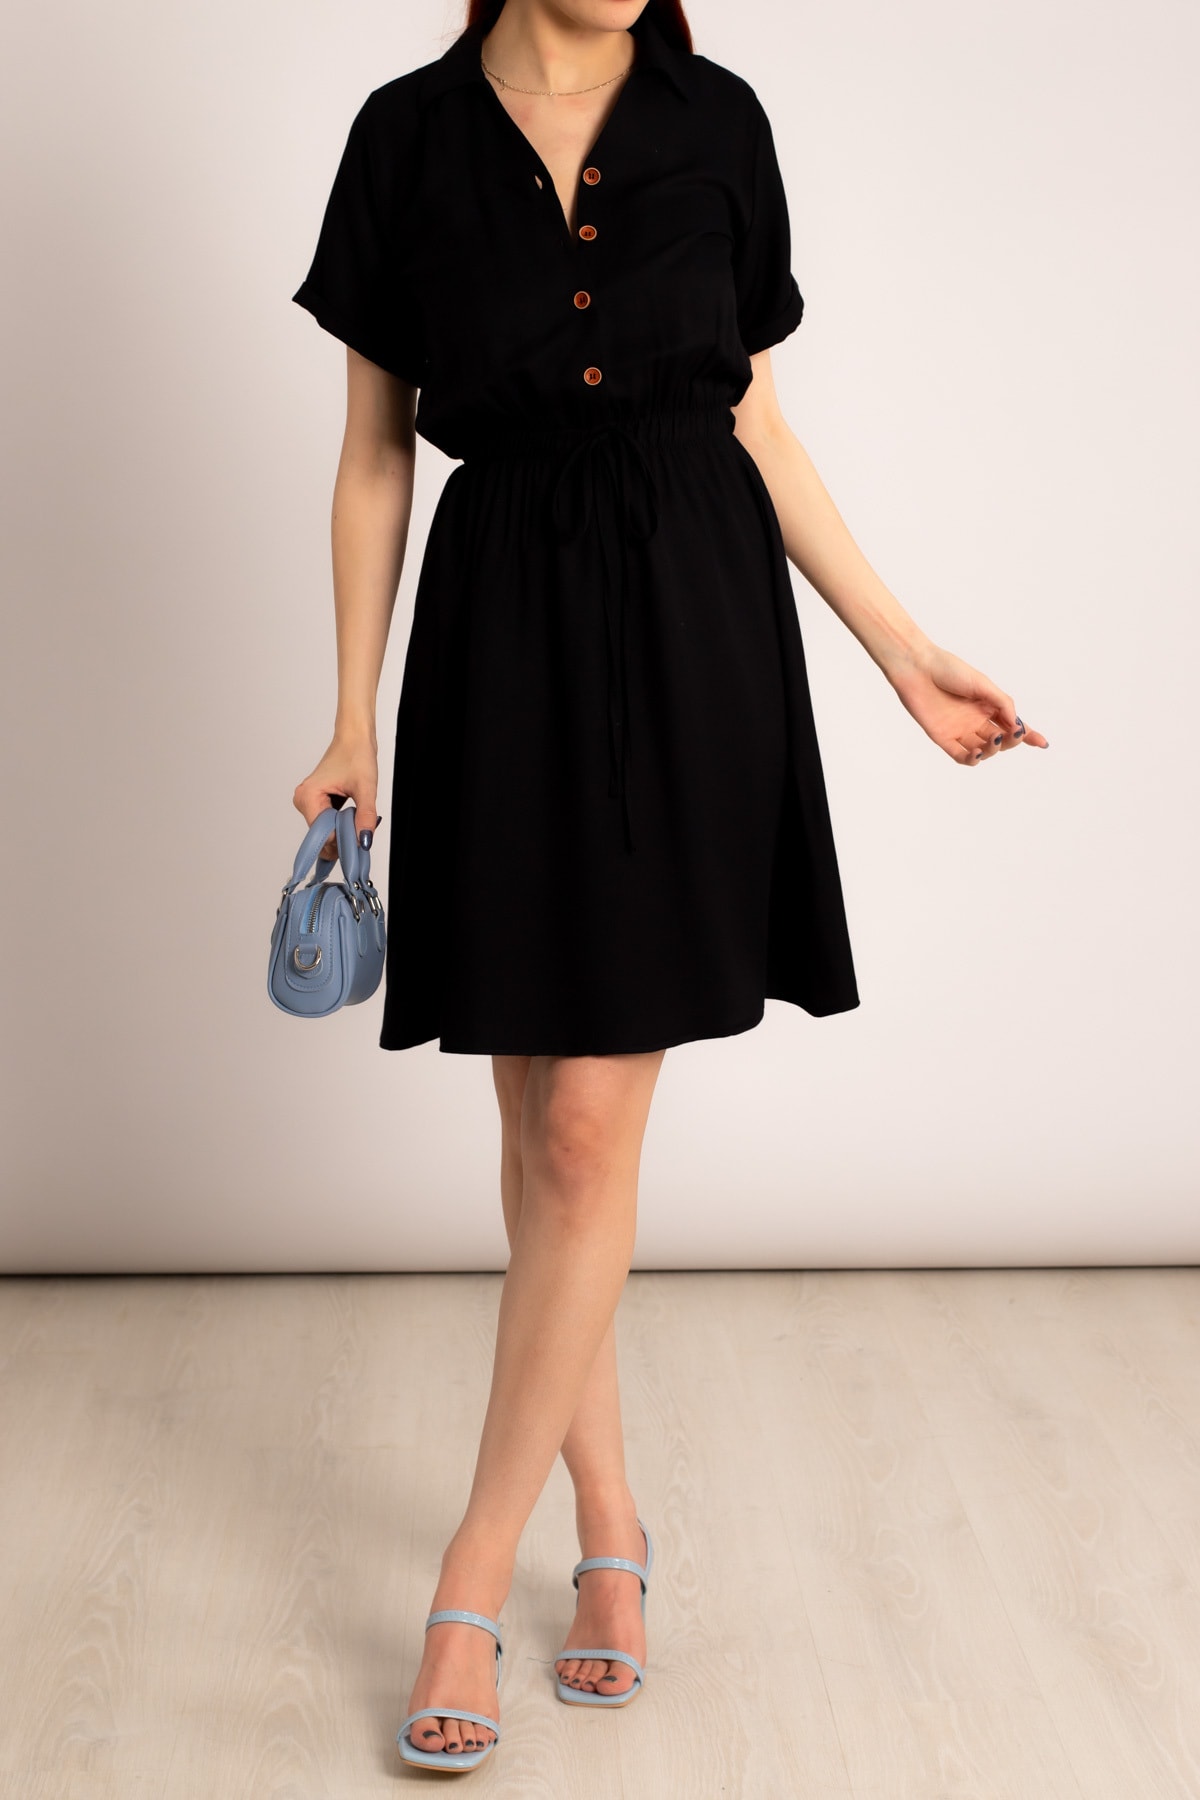 armonika Women's Black Elastic Waist Short Sleeve Shirt Dress